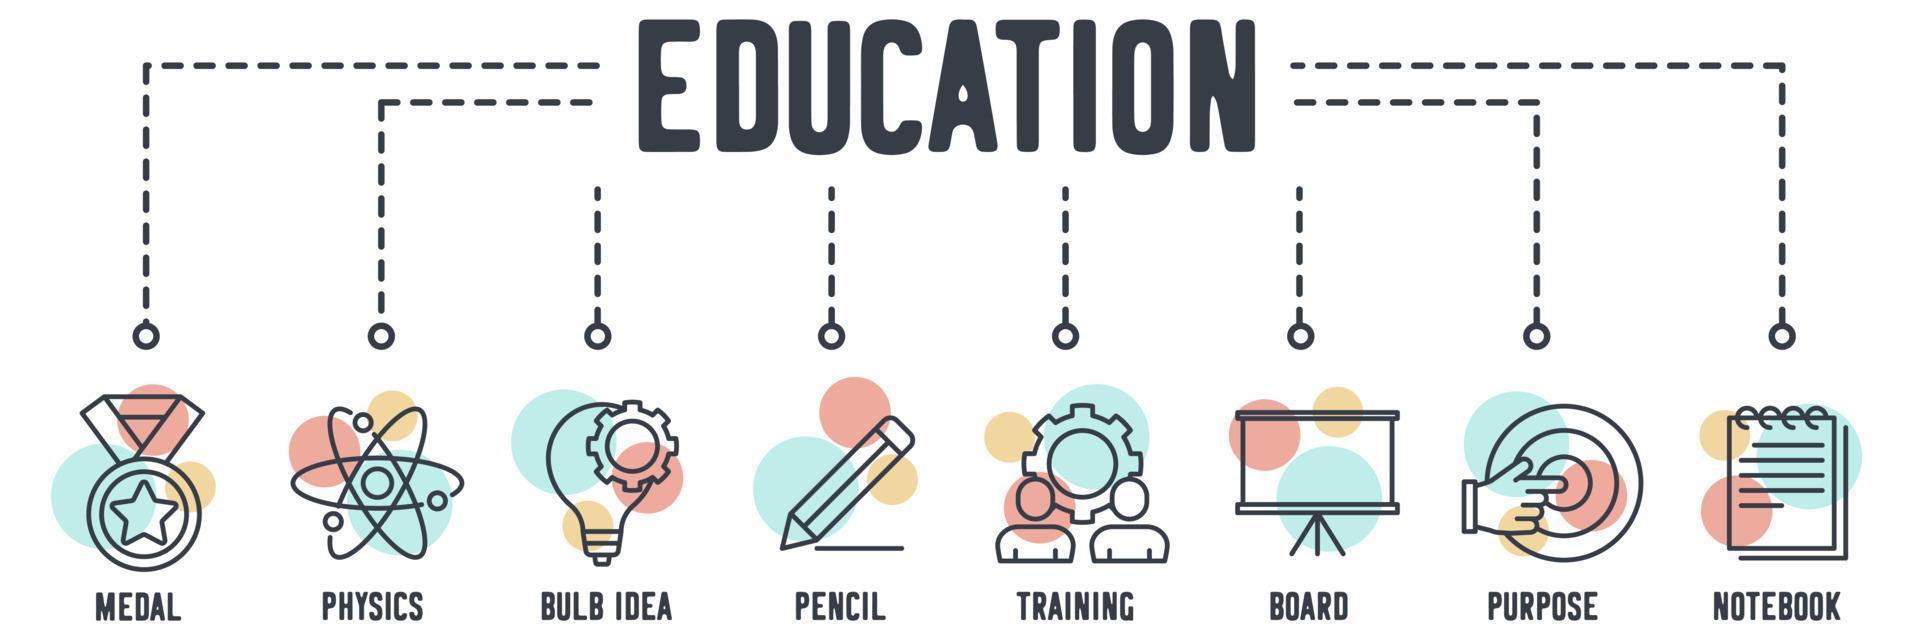 education banner web icon. medal, physics, bulb idea, pencil, training, board, purpose, notebook vector illustration concept.